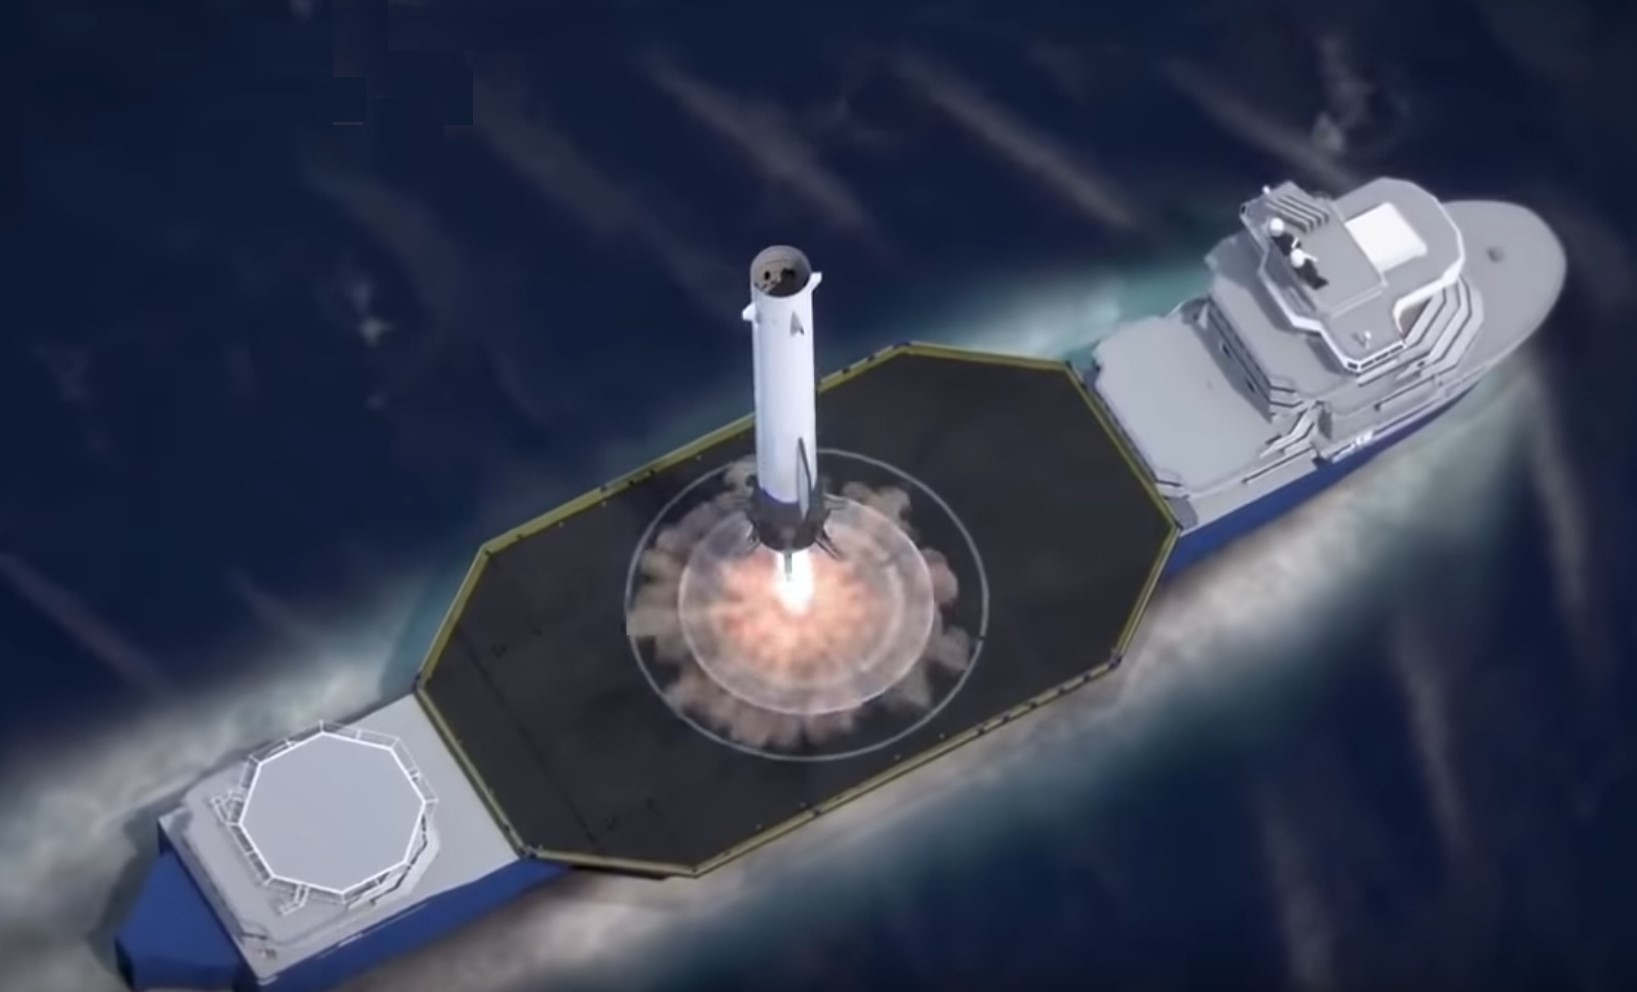 Blue Origin's New Glenn Rocket animation